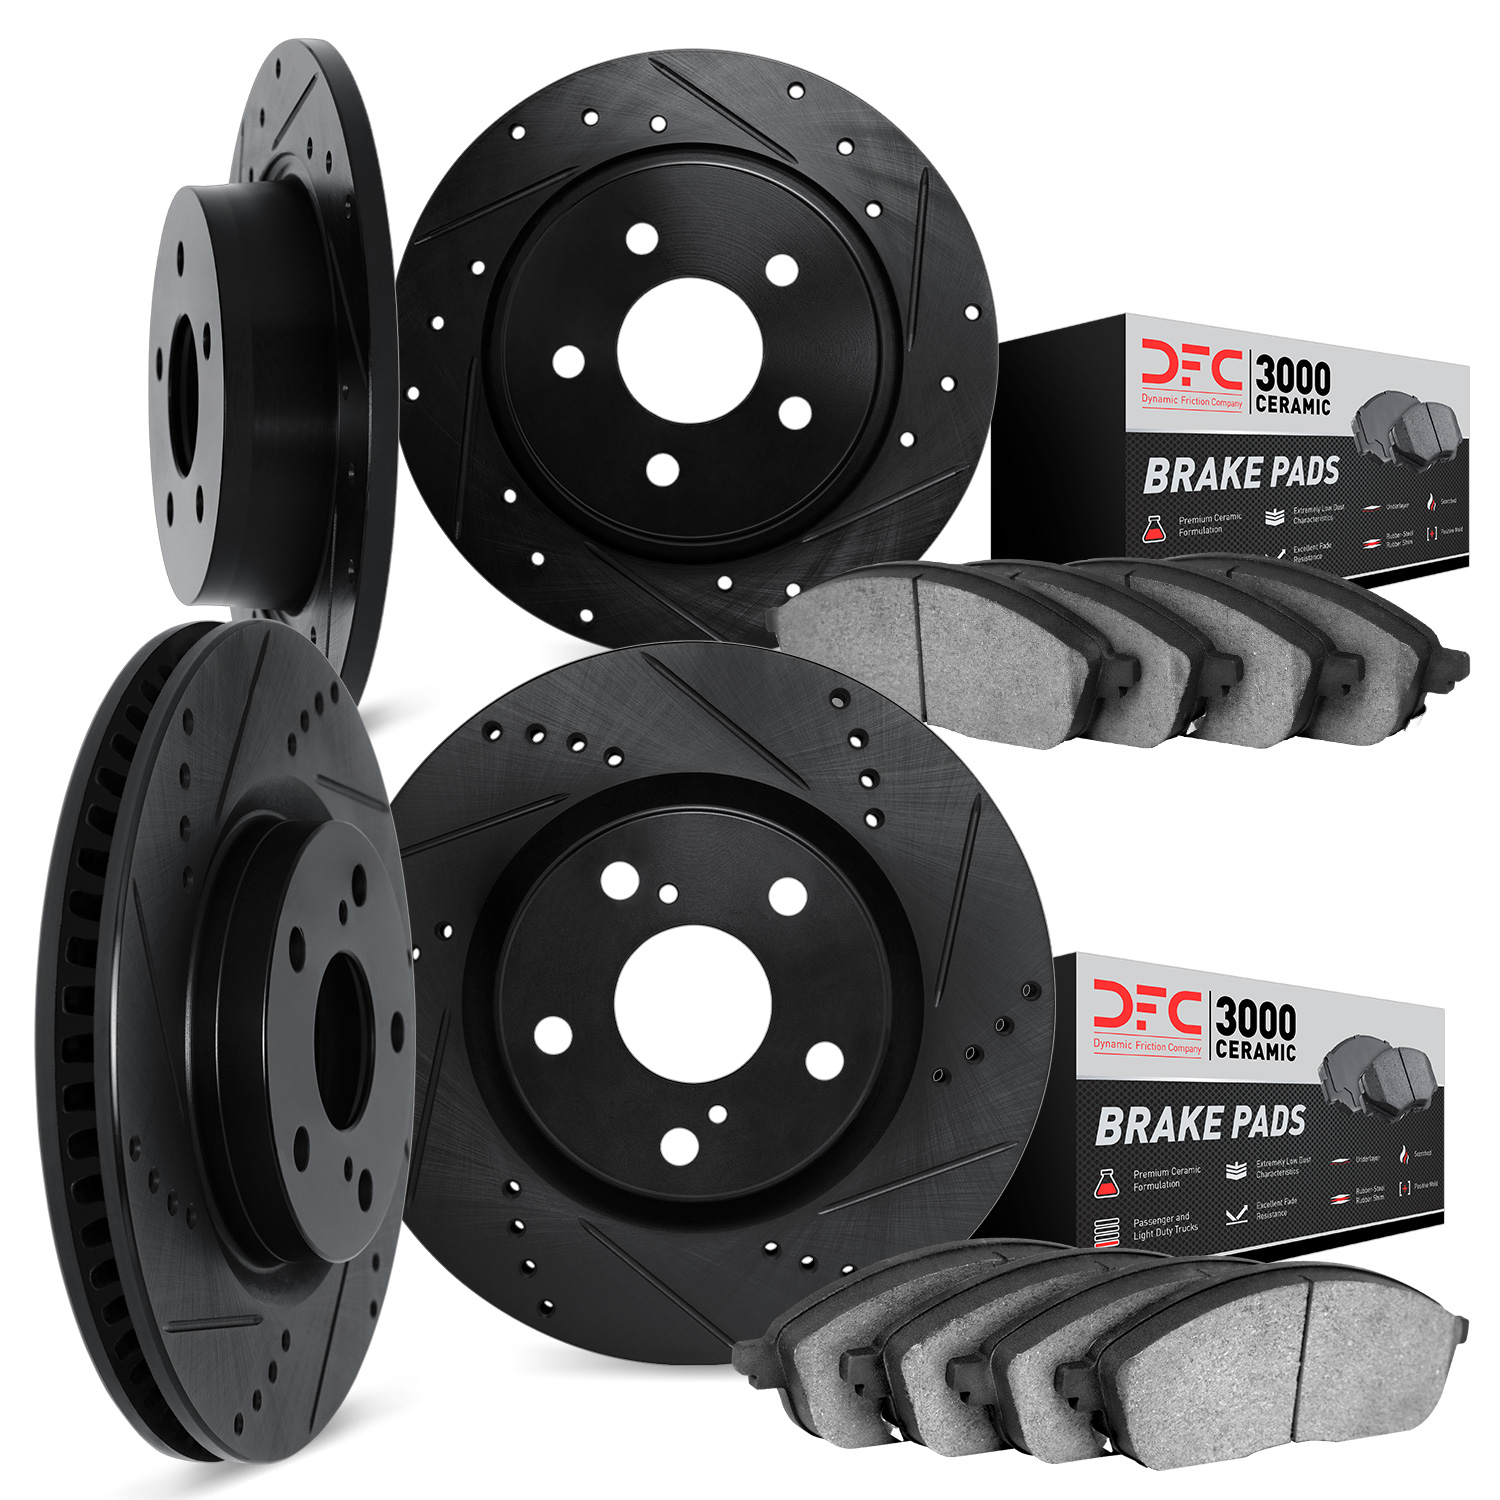 8304-54092 Drilled/Slotted Brake Rotors with 3000-Series Ceramic Brake Pads Kit [Black], 2011-2019 Ford/Lincoln/Mercury/Mazda, P